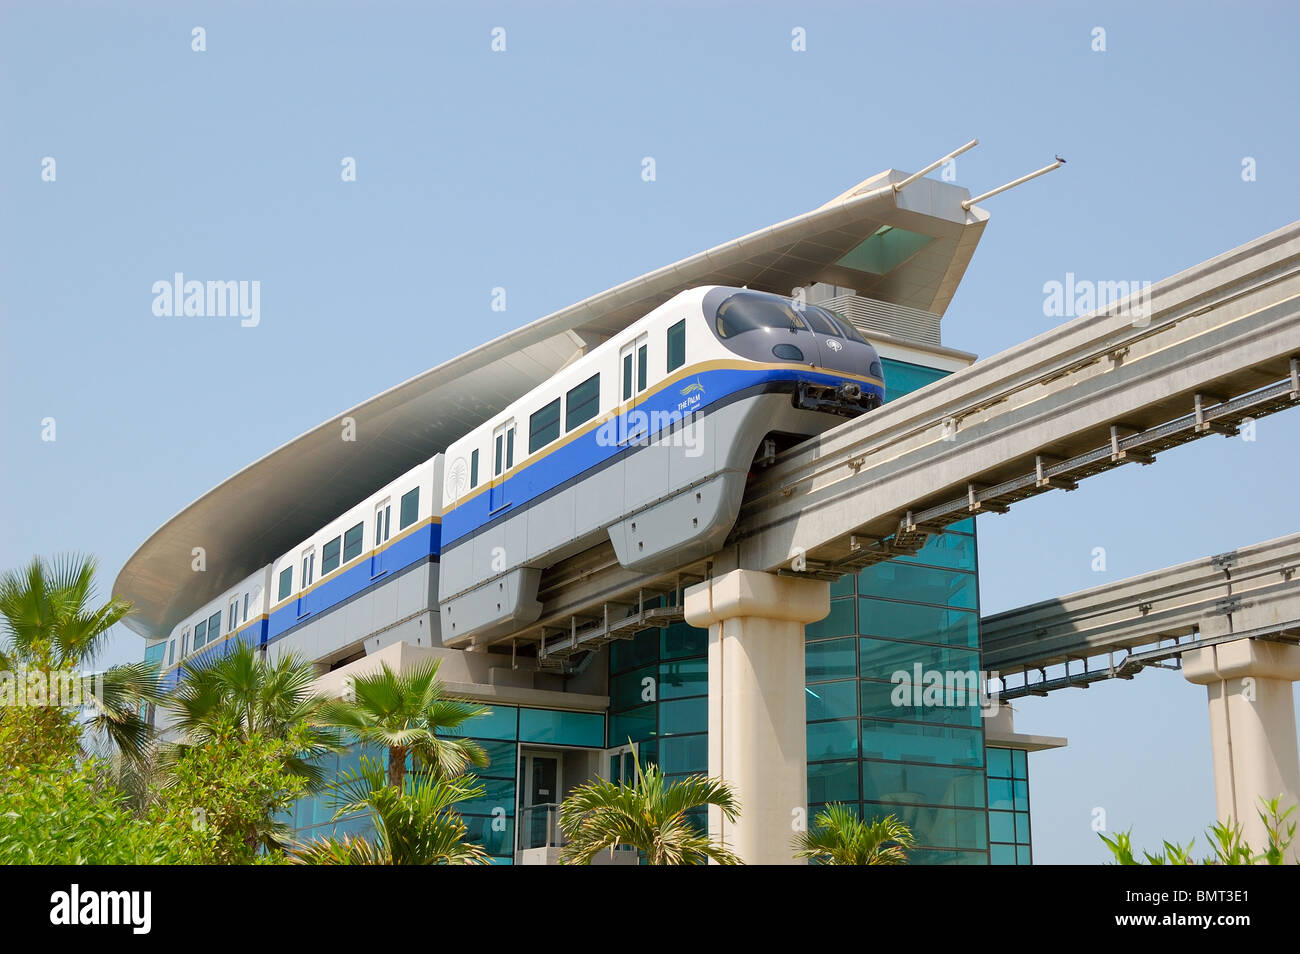 The Palm Jumeirah monorail station and train, Dubai, United Arab Emirates Stock Photo